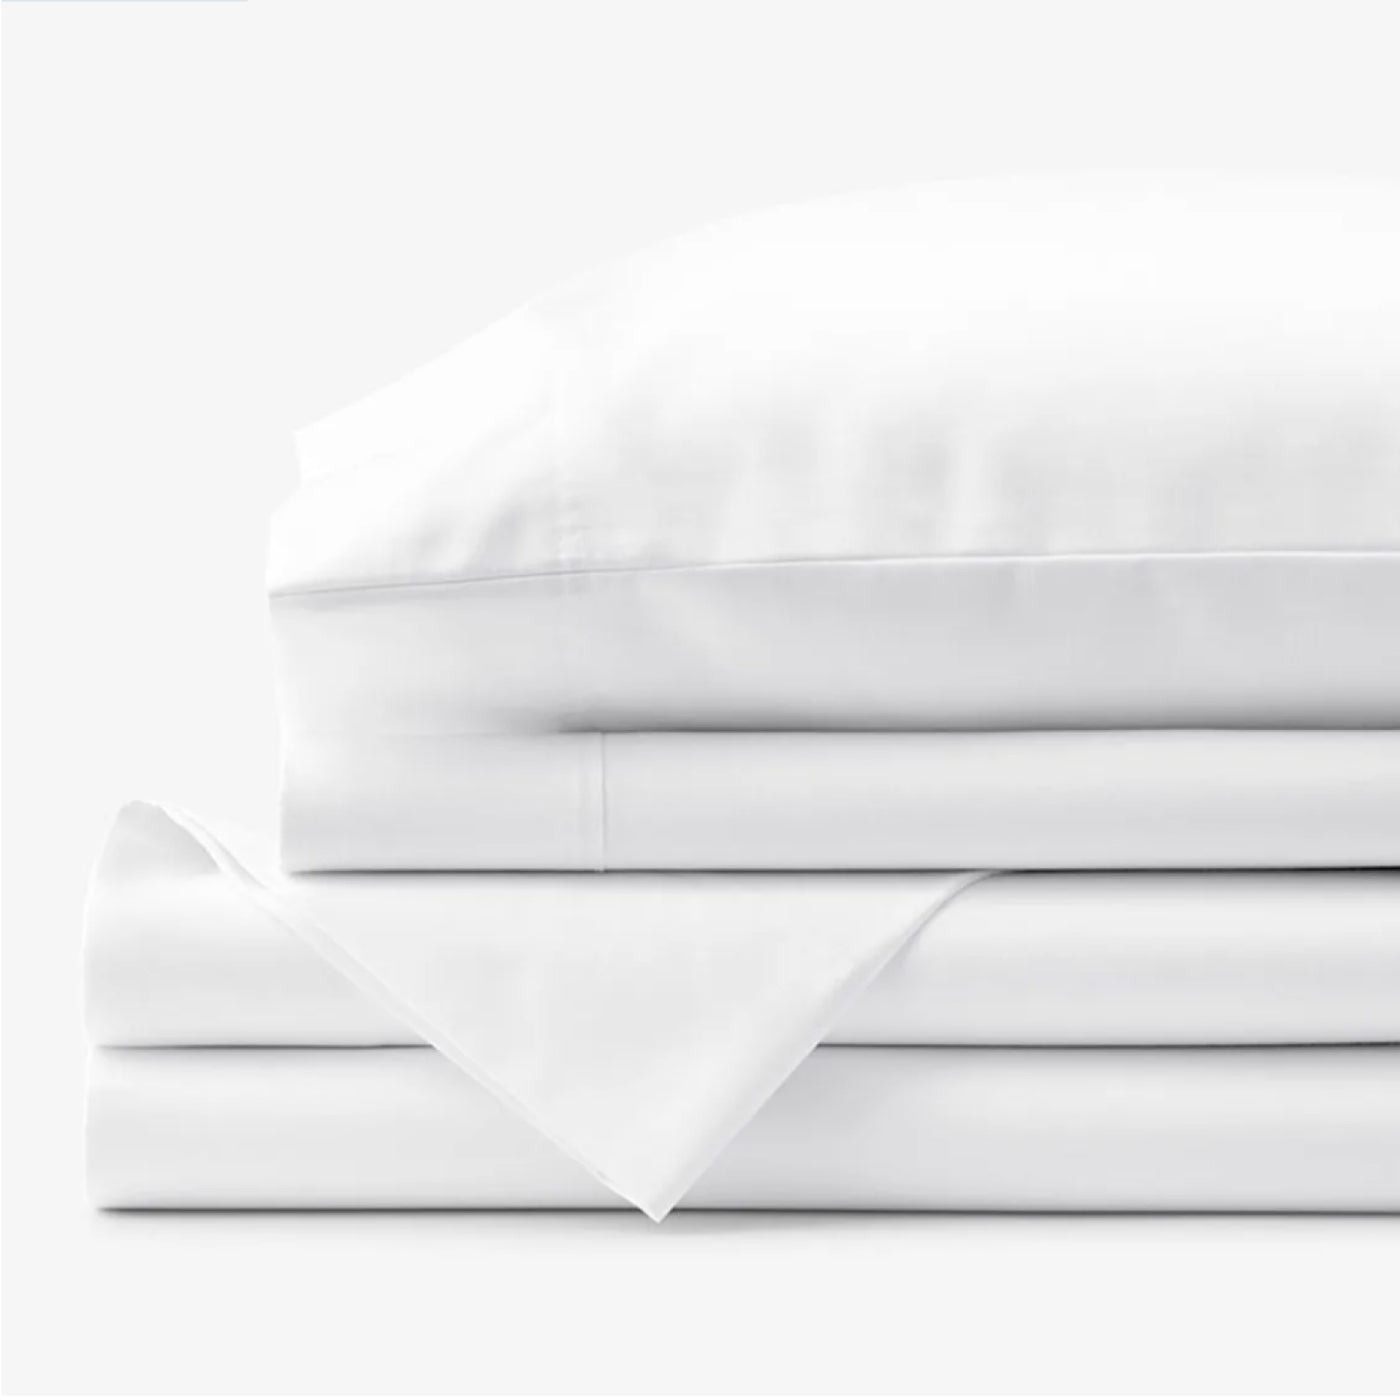 150 TC Pure Cotton 3 Pc Flat Bed Sheet Set - Bedding Basics Collection - White